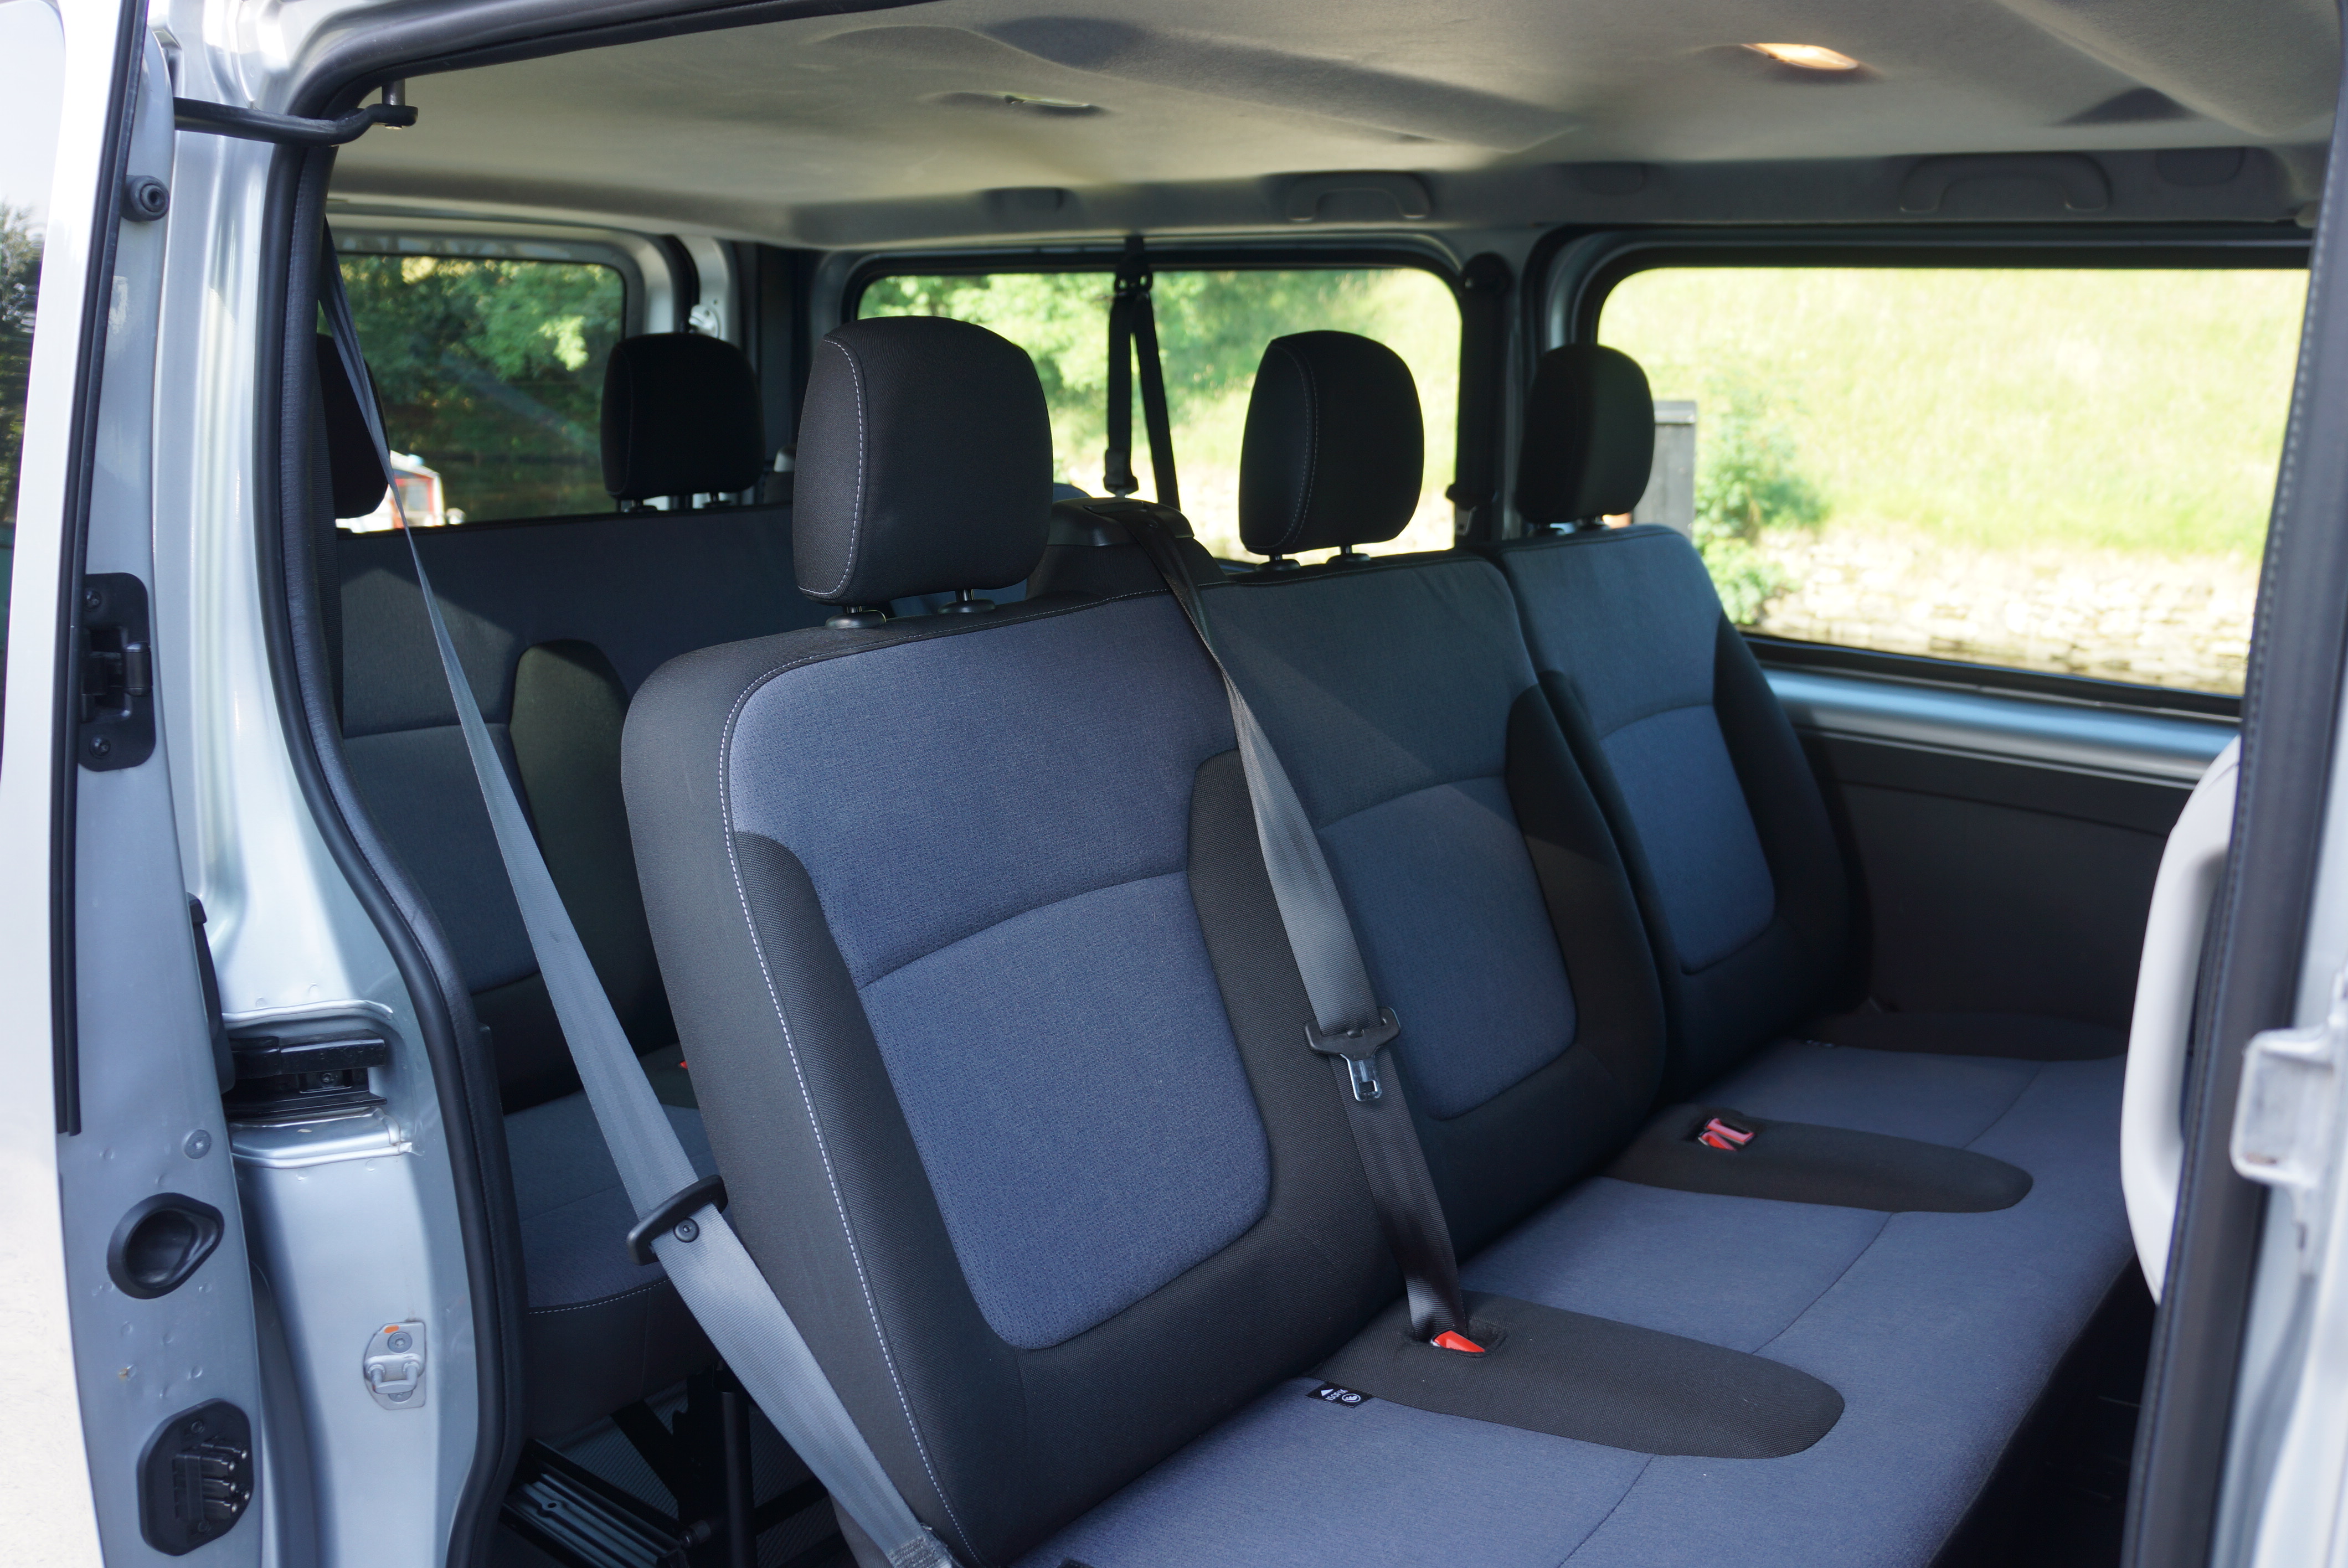 Minibus 9 Seater Hire | Vehicle Rental 